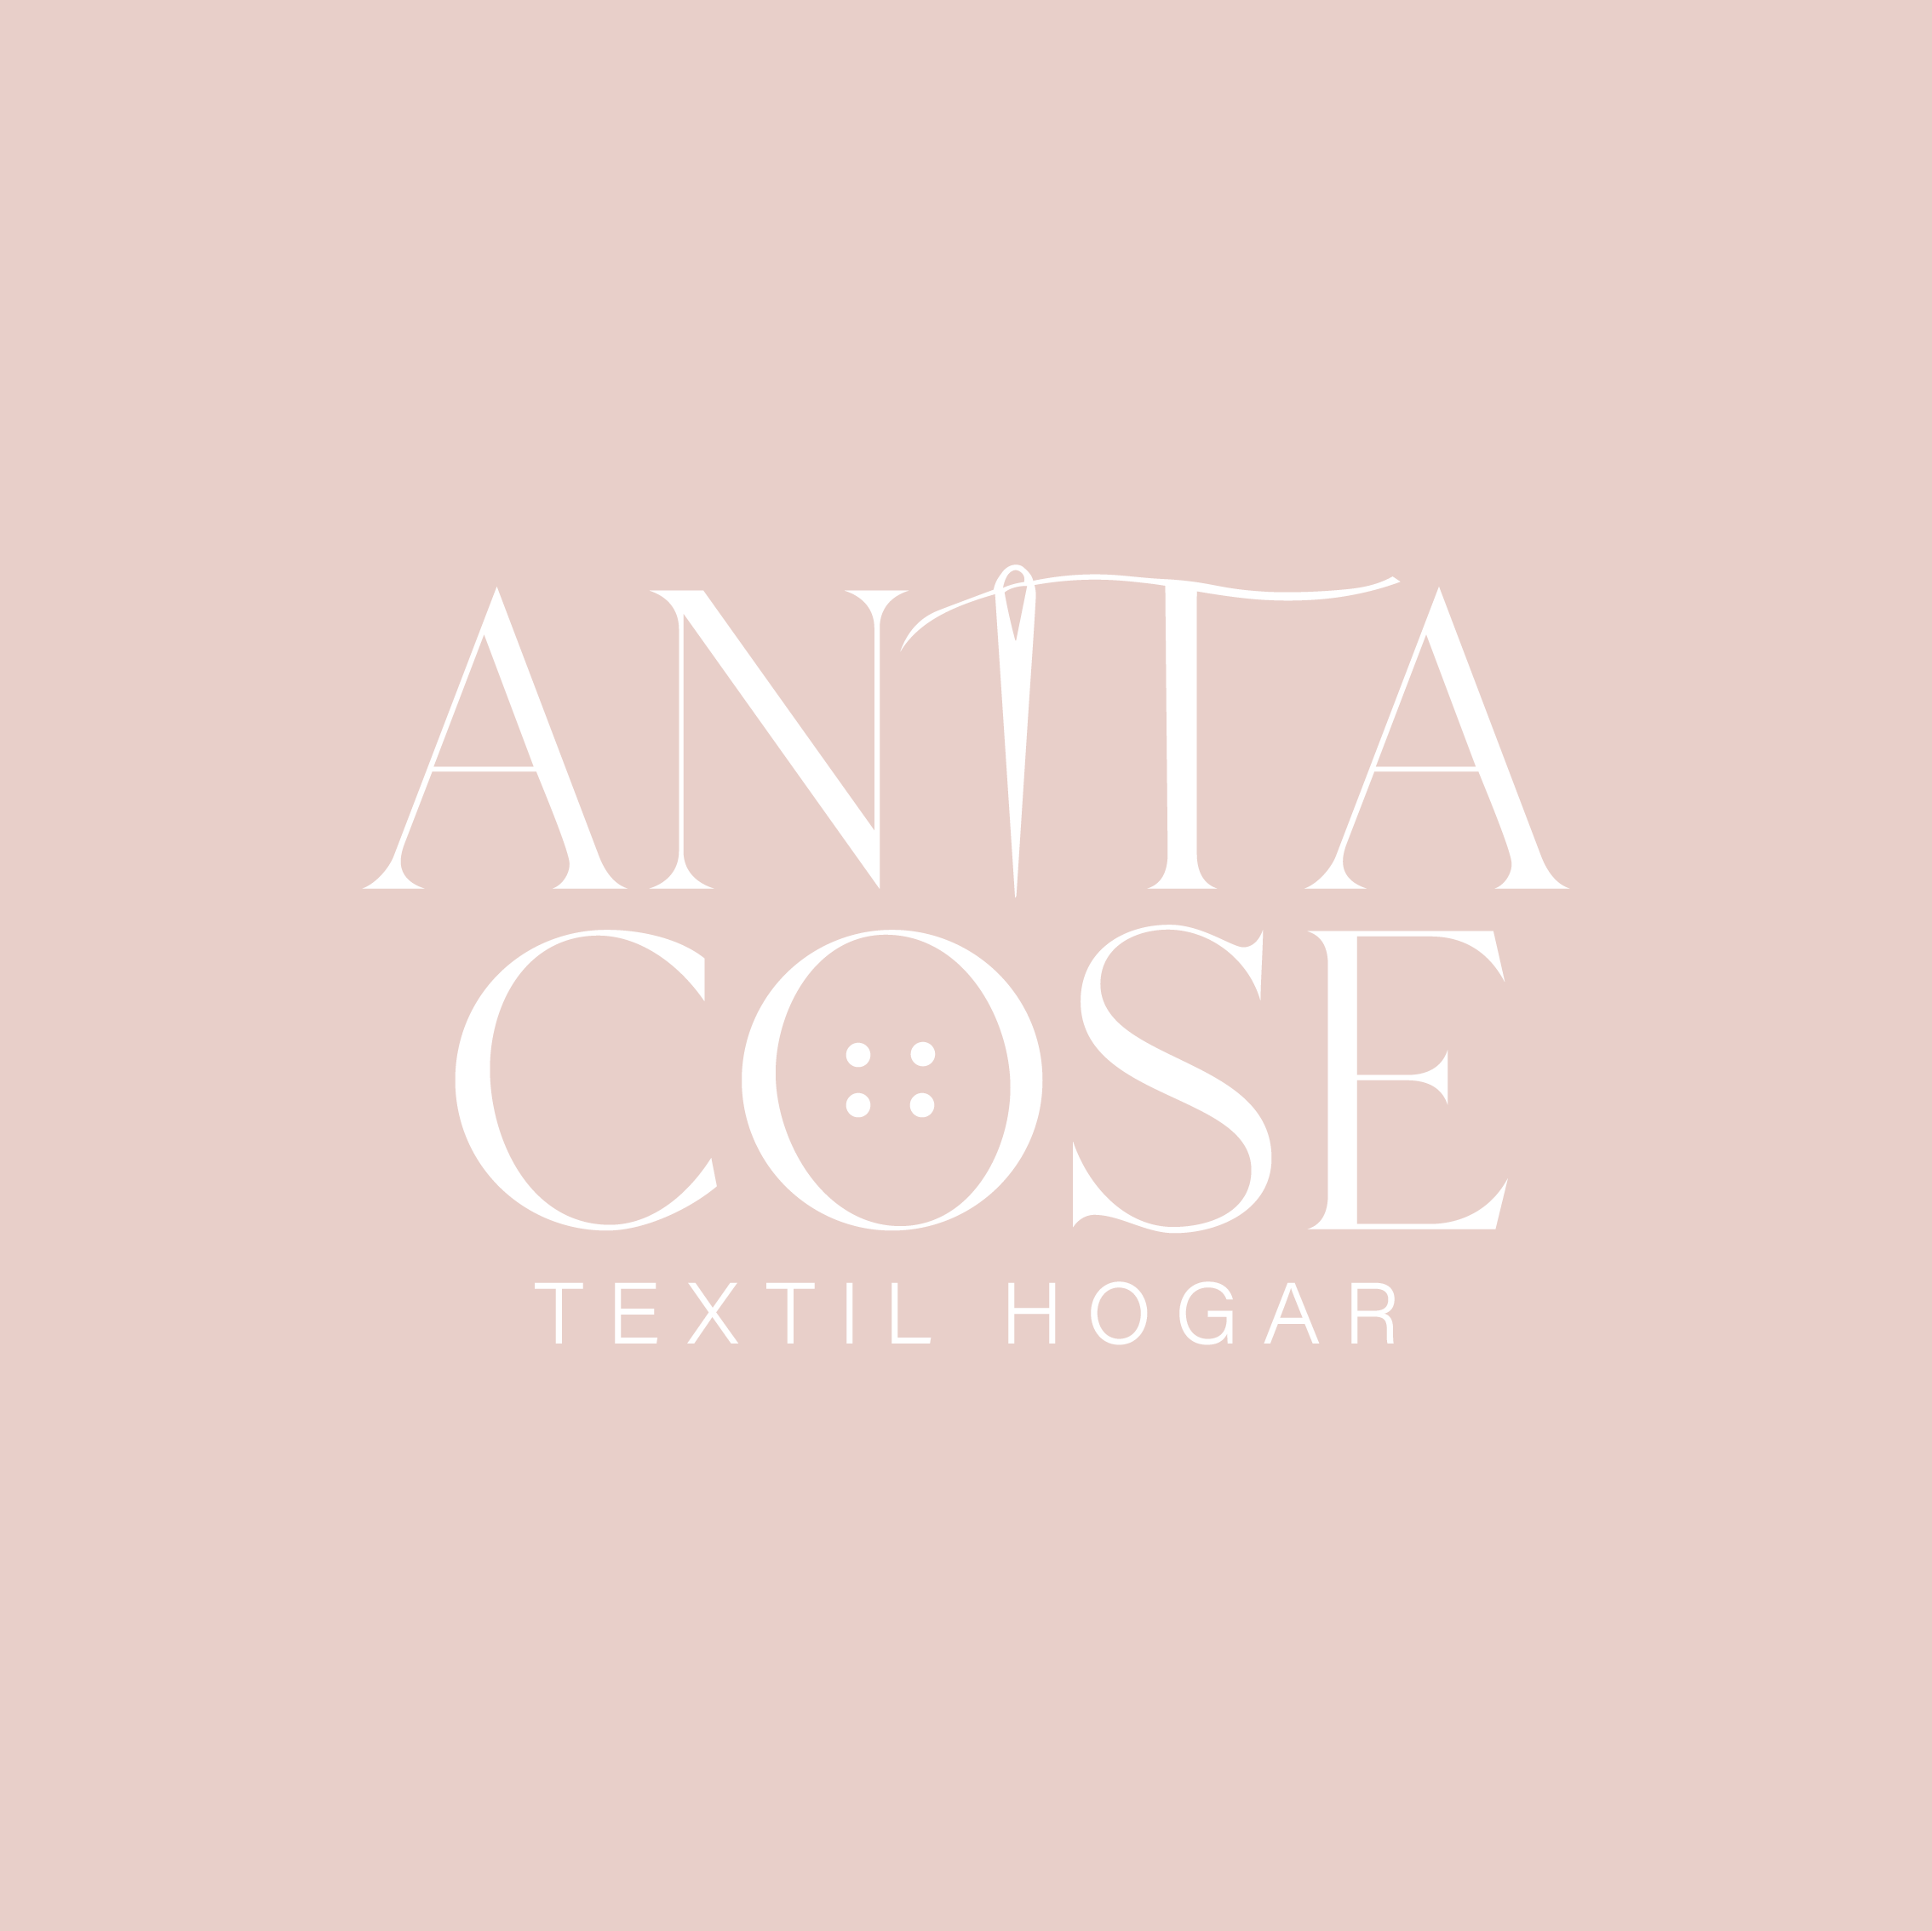 Anita Cose